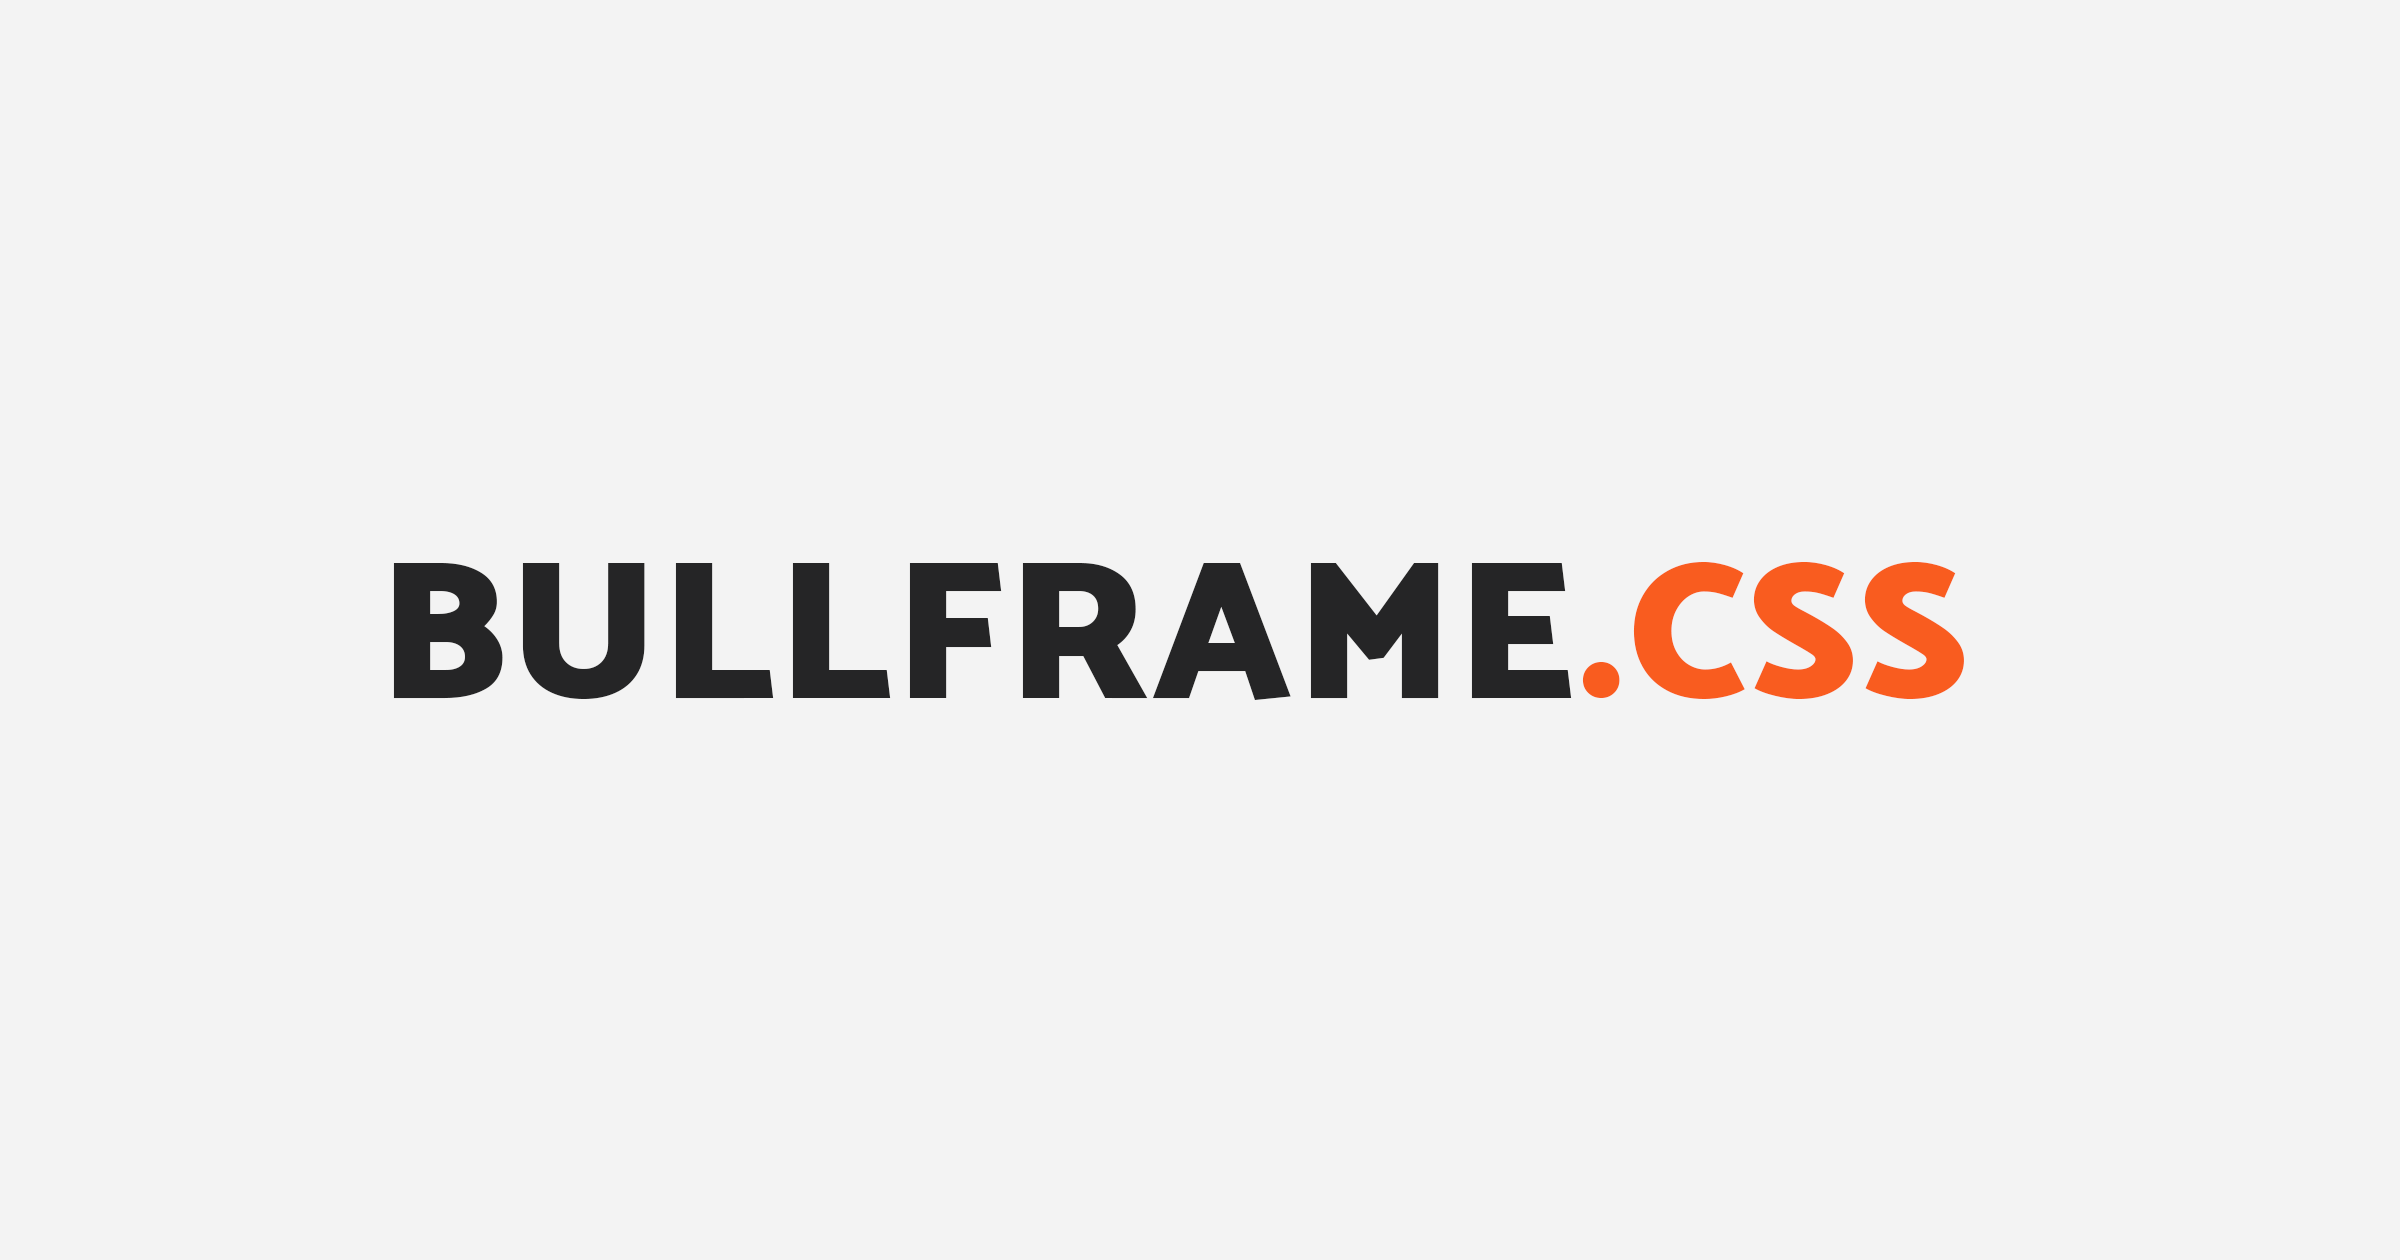 bullframe.css logo